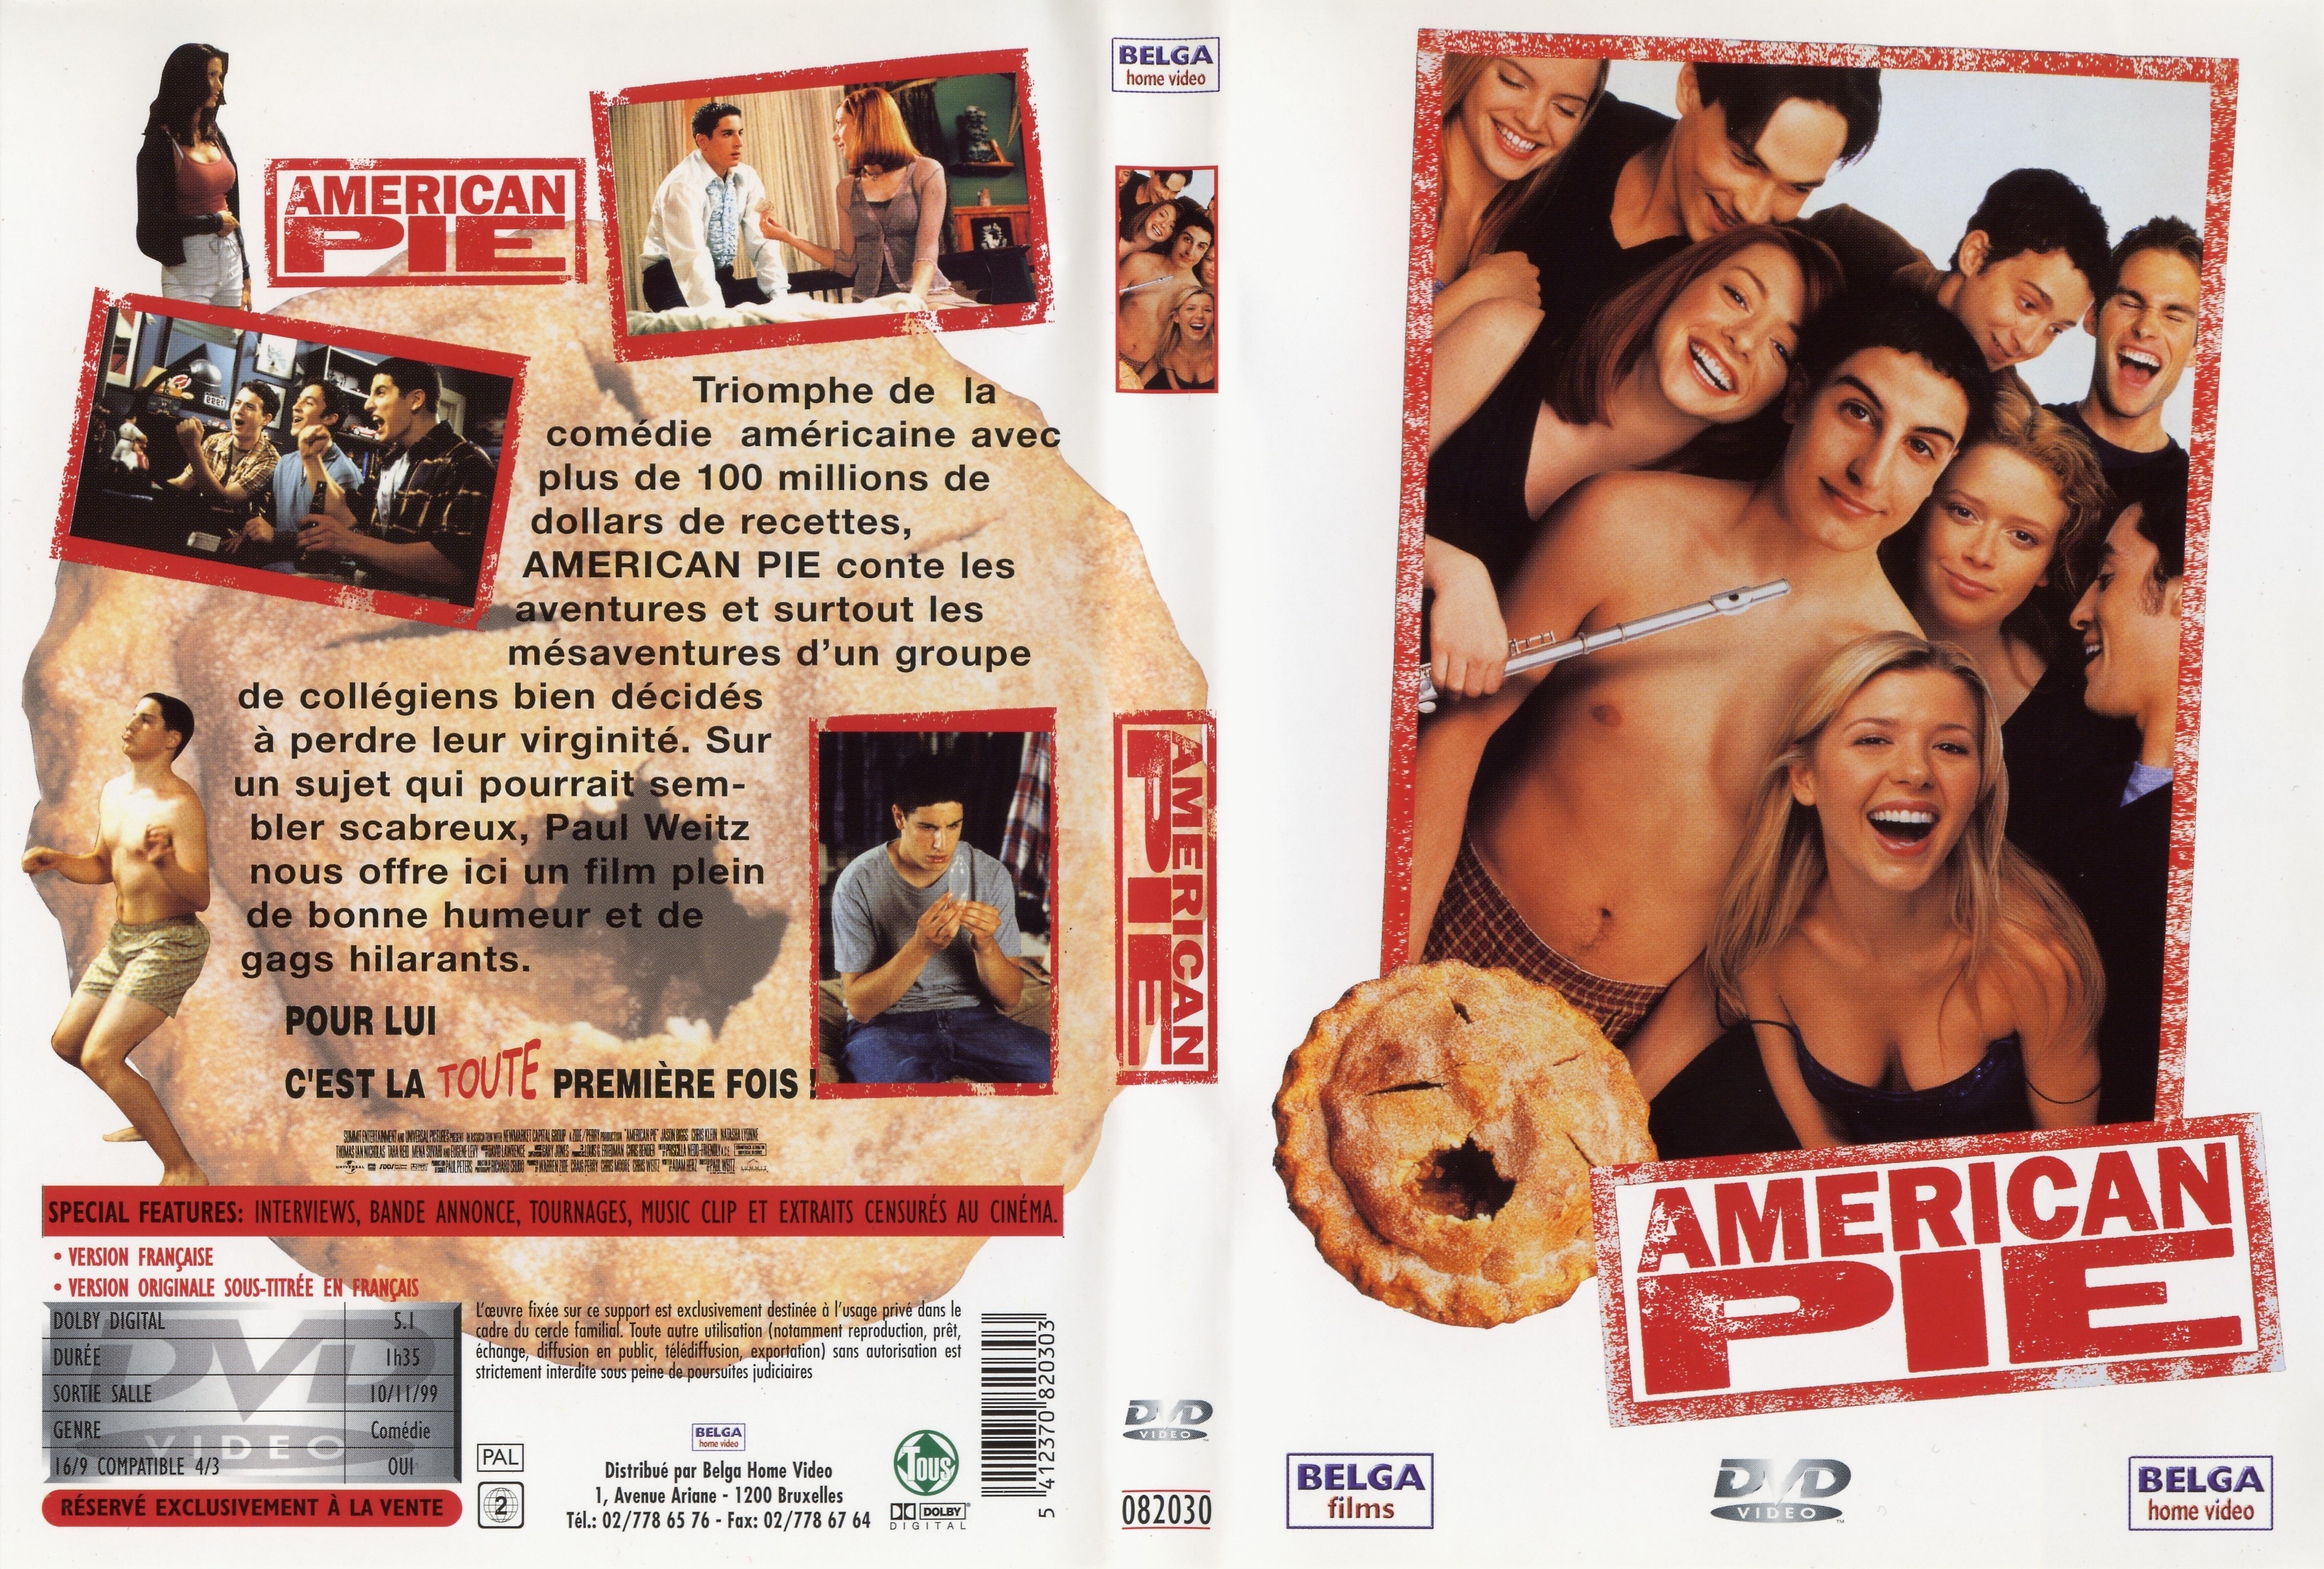 Jaquette DVD American pie v2